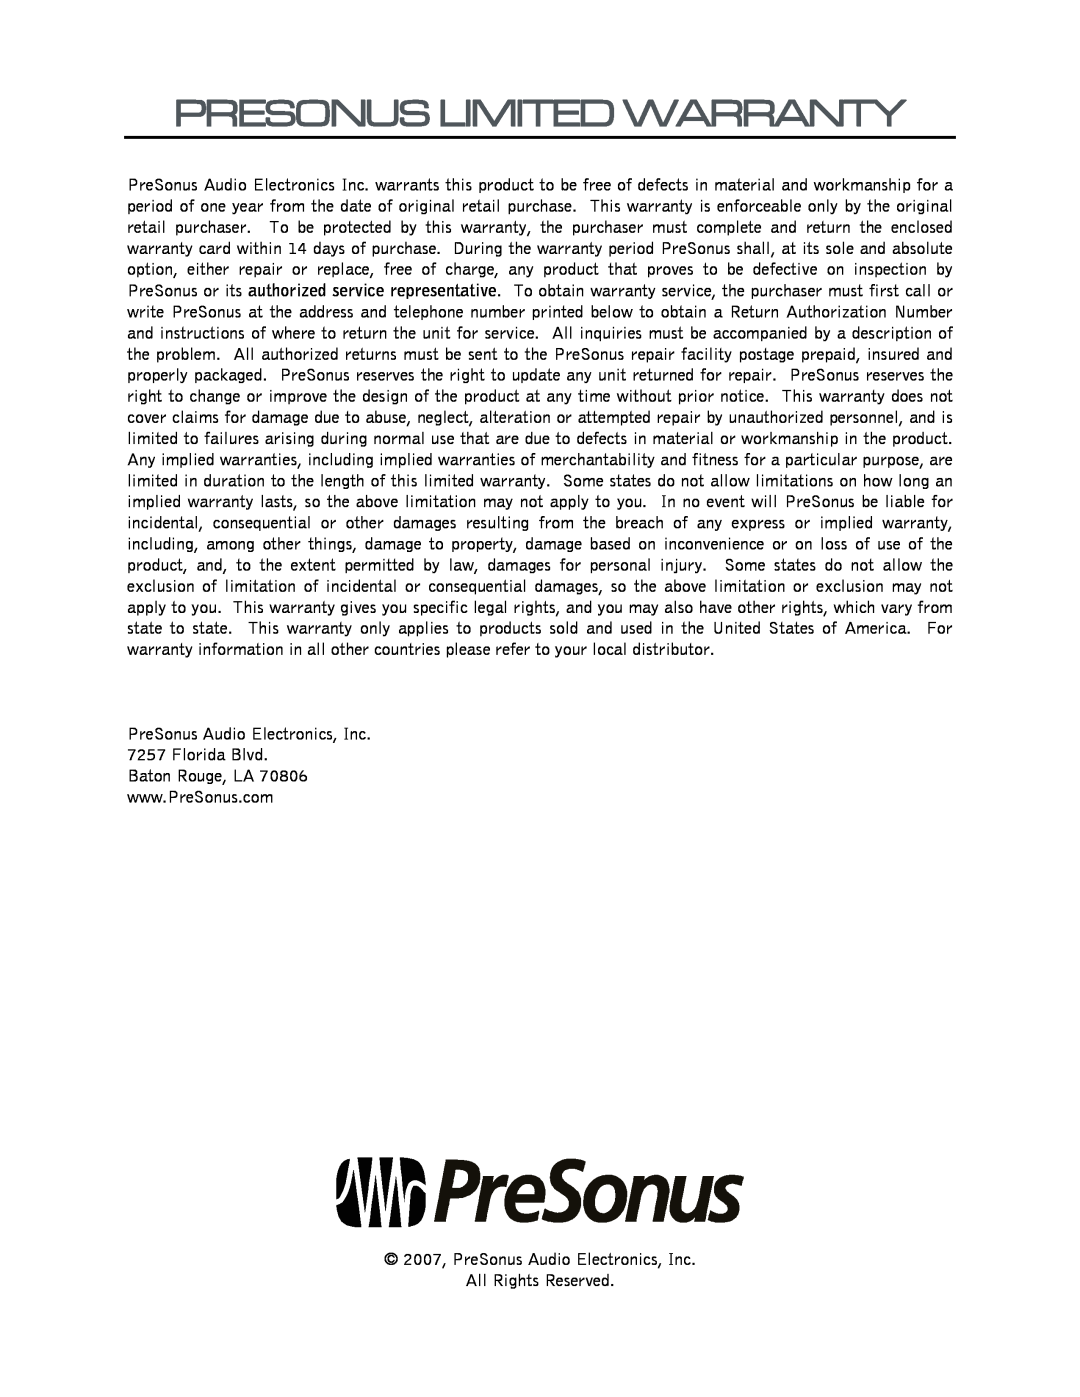 Presonus Audio electronic D8 Presonus Limited Warranty, 2007, PreSonus Audio Electronics, Inc, All Rights Reserved 